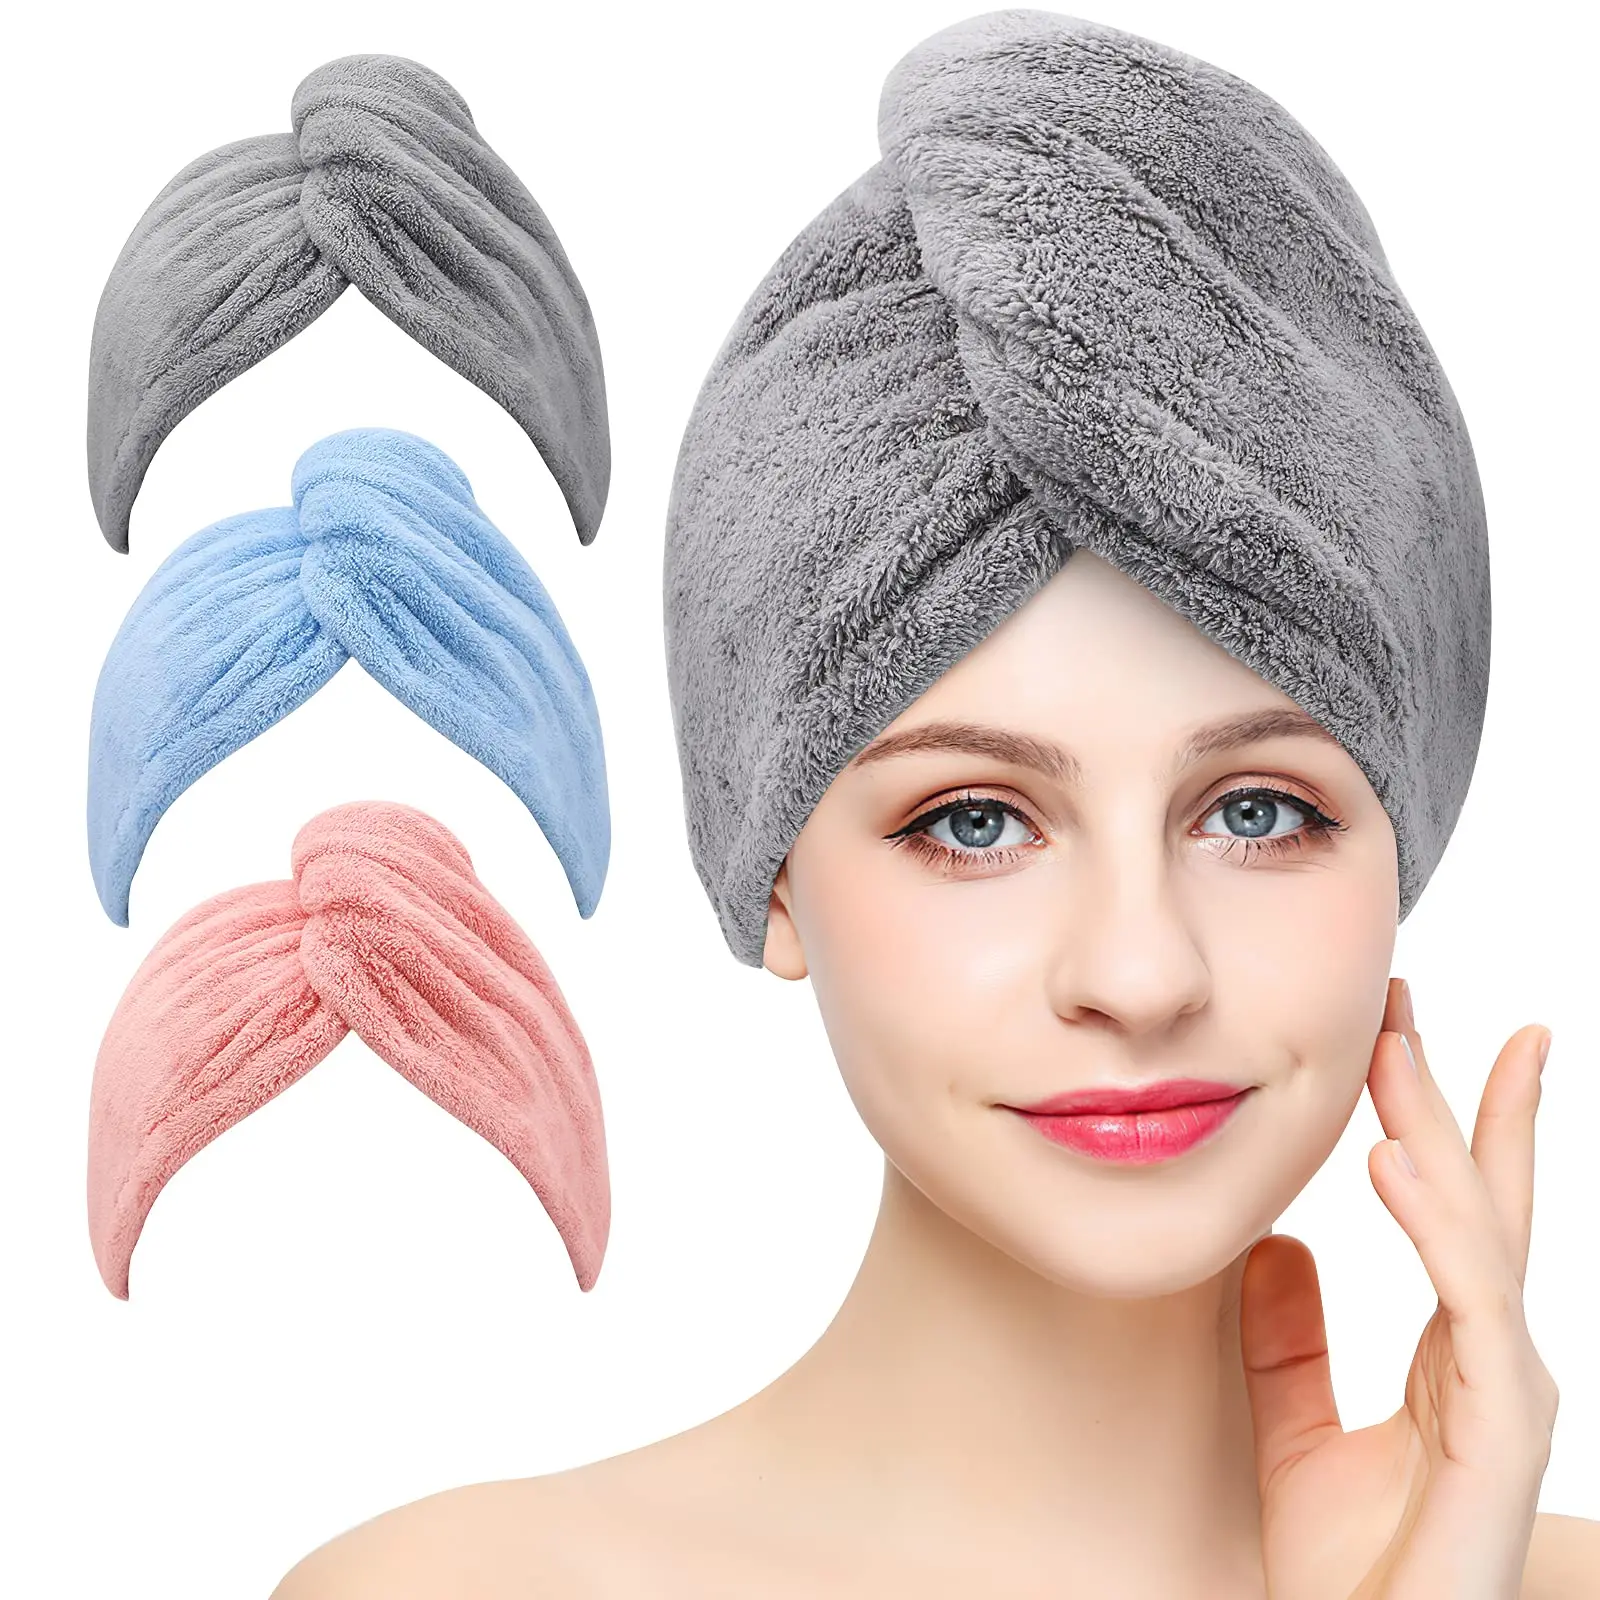 QUICK HAIR DRY MAGIC TURBAN TOWEL MICROFIBRE HAIR WRAP BATH TOWEL CAP HAT UK 